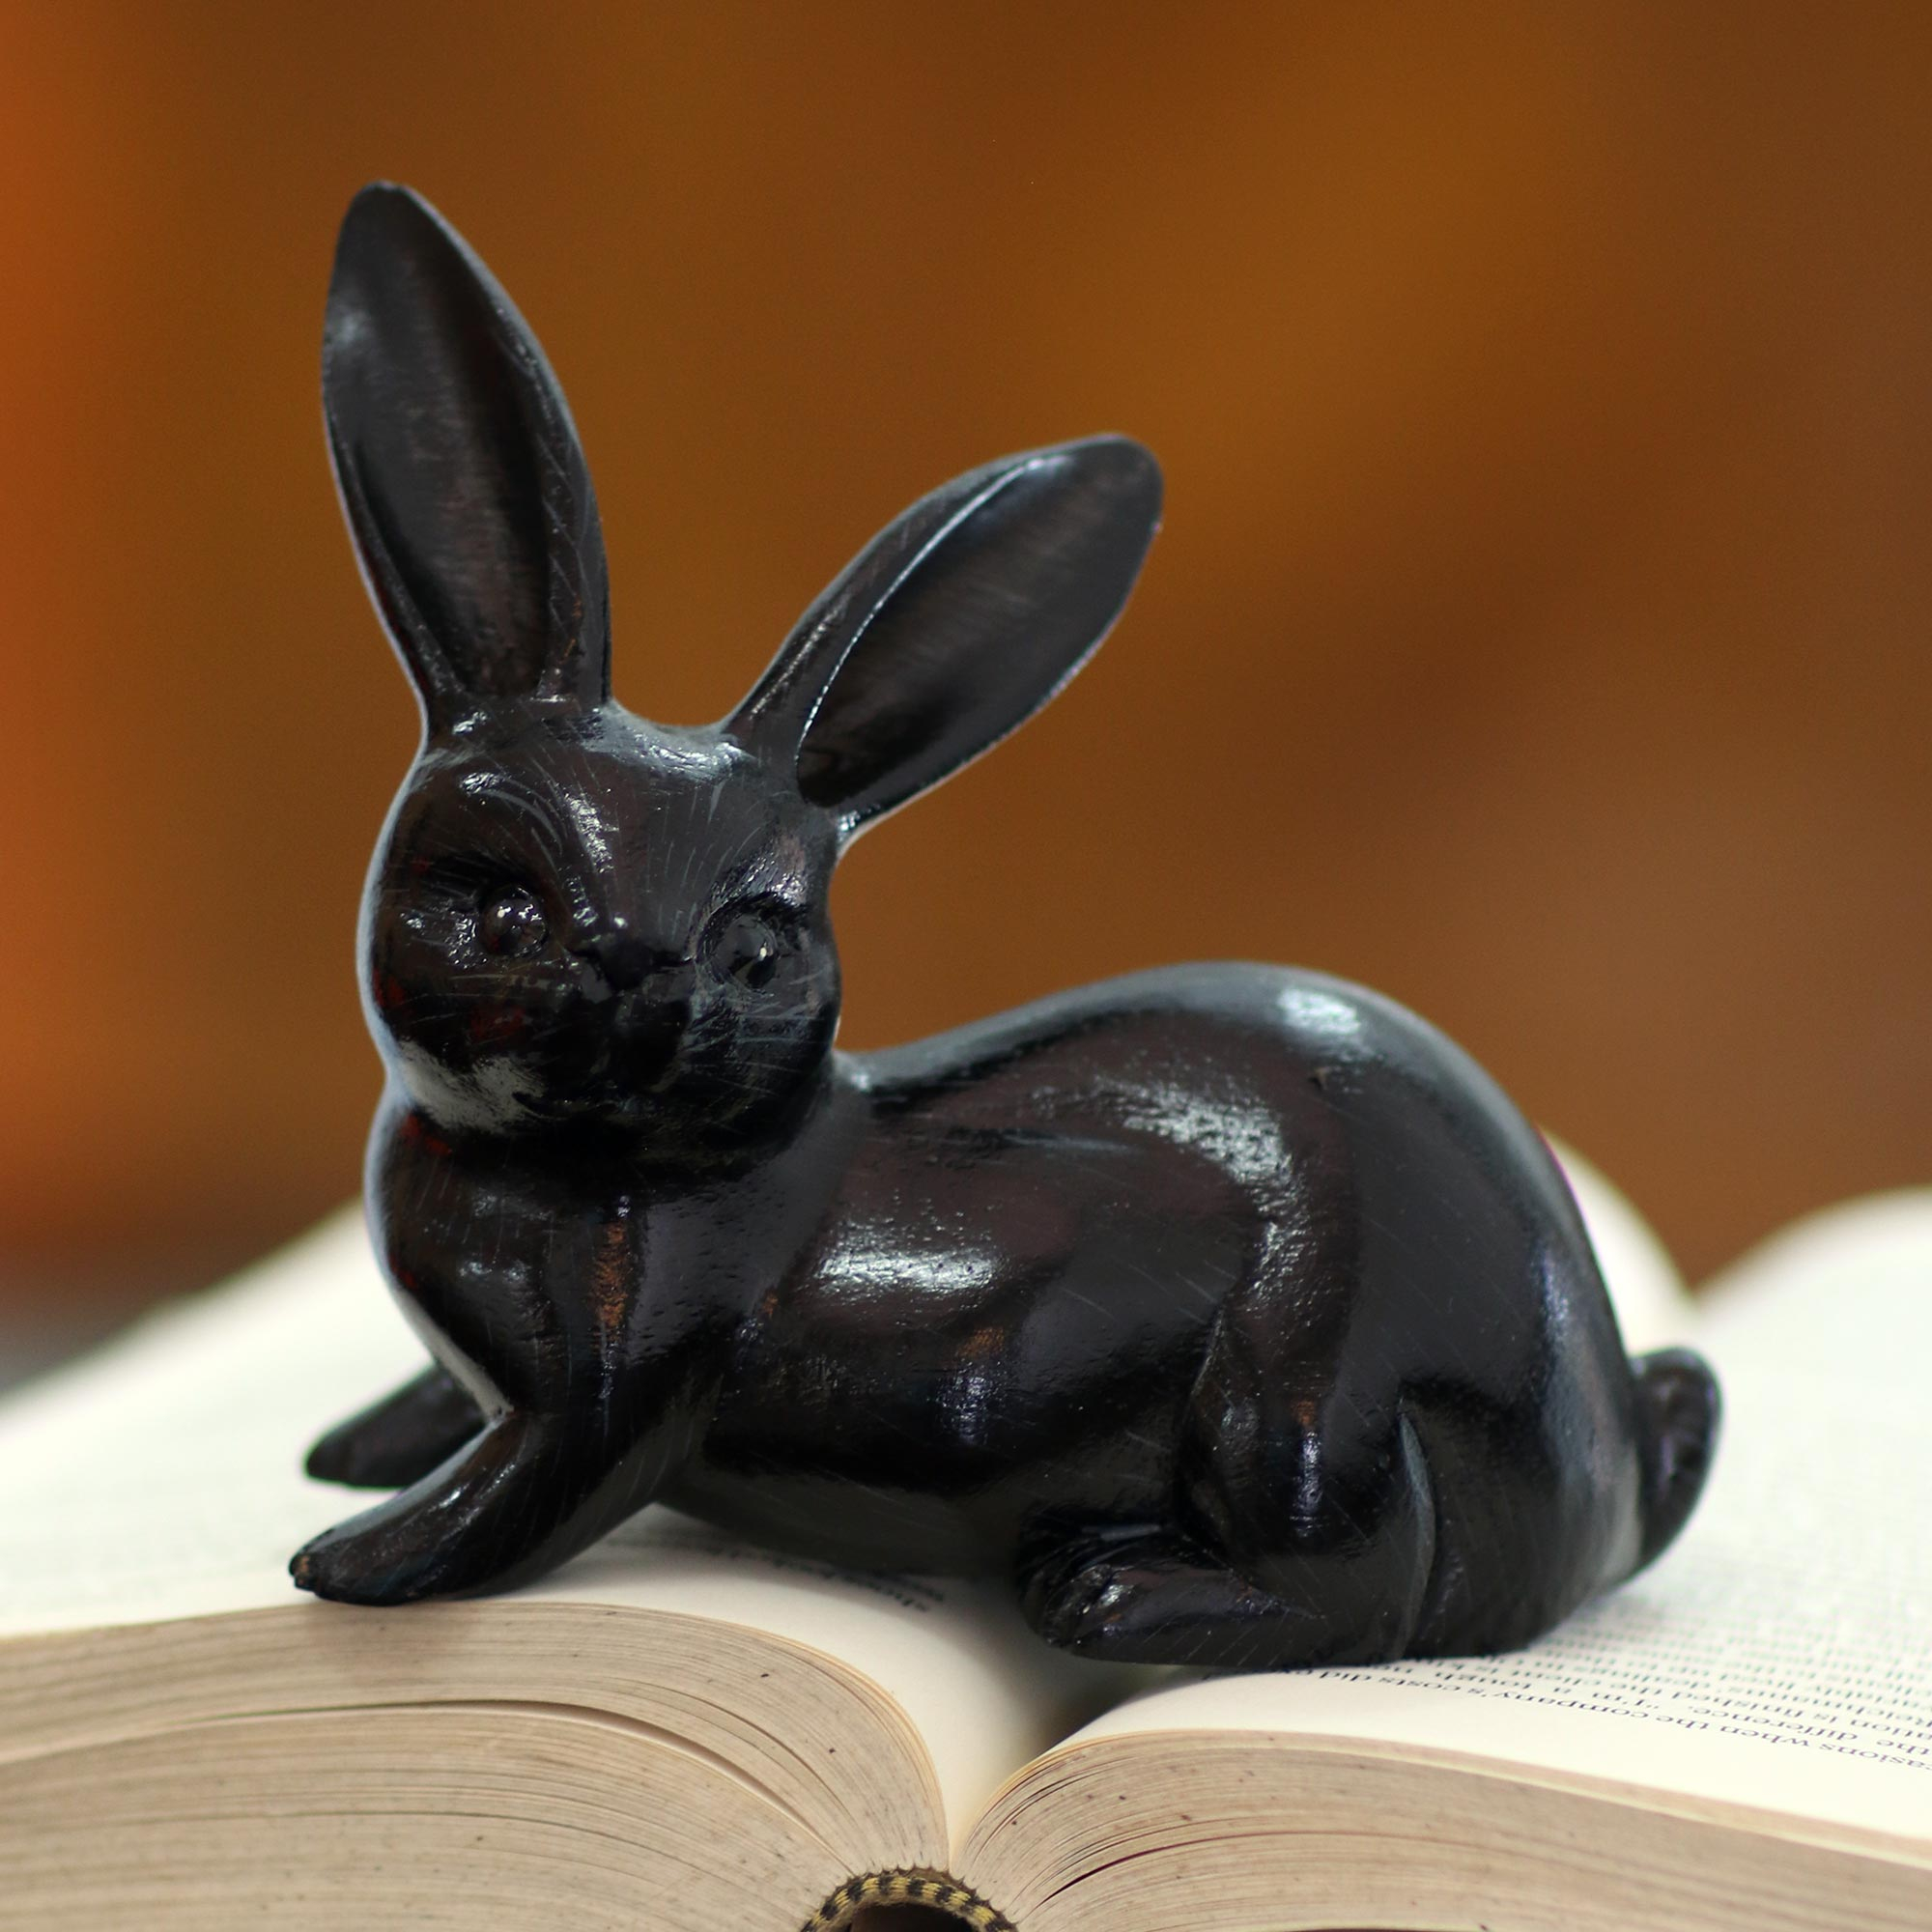 Fair Trade Hand Carved Wooden Rabbit Statuette, 'Cute Ginger Rabbit